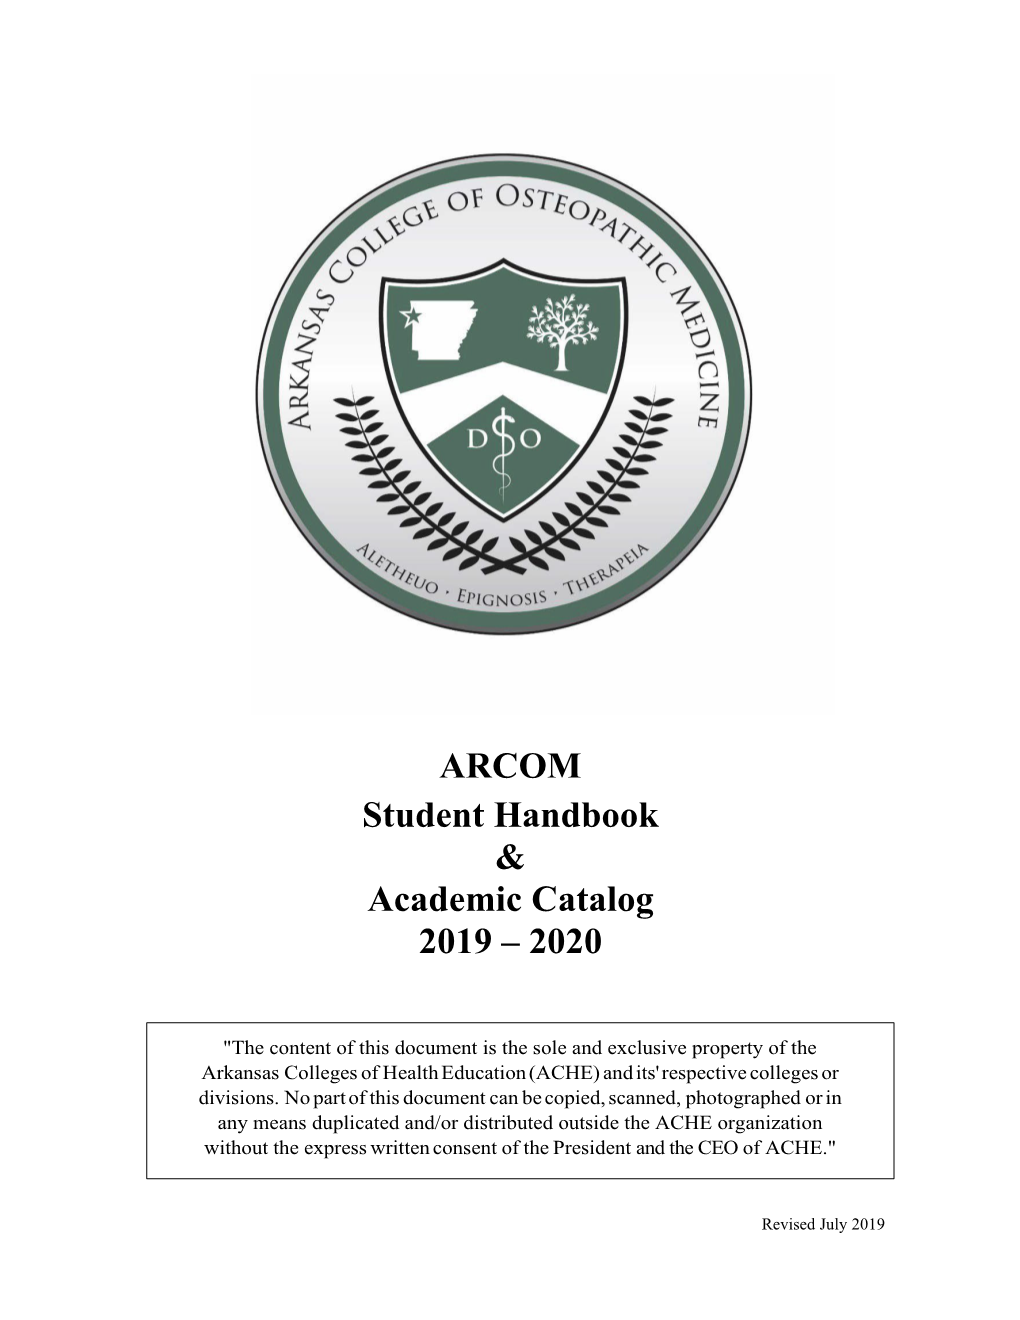 ARCOM Student Handbook & Academic Catalog 2019 – 2020